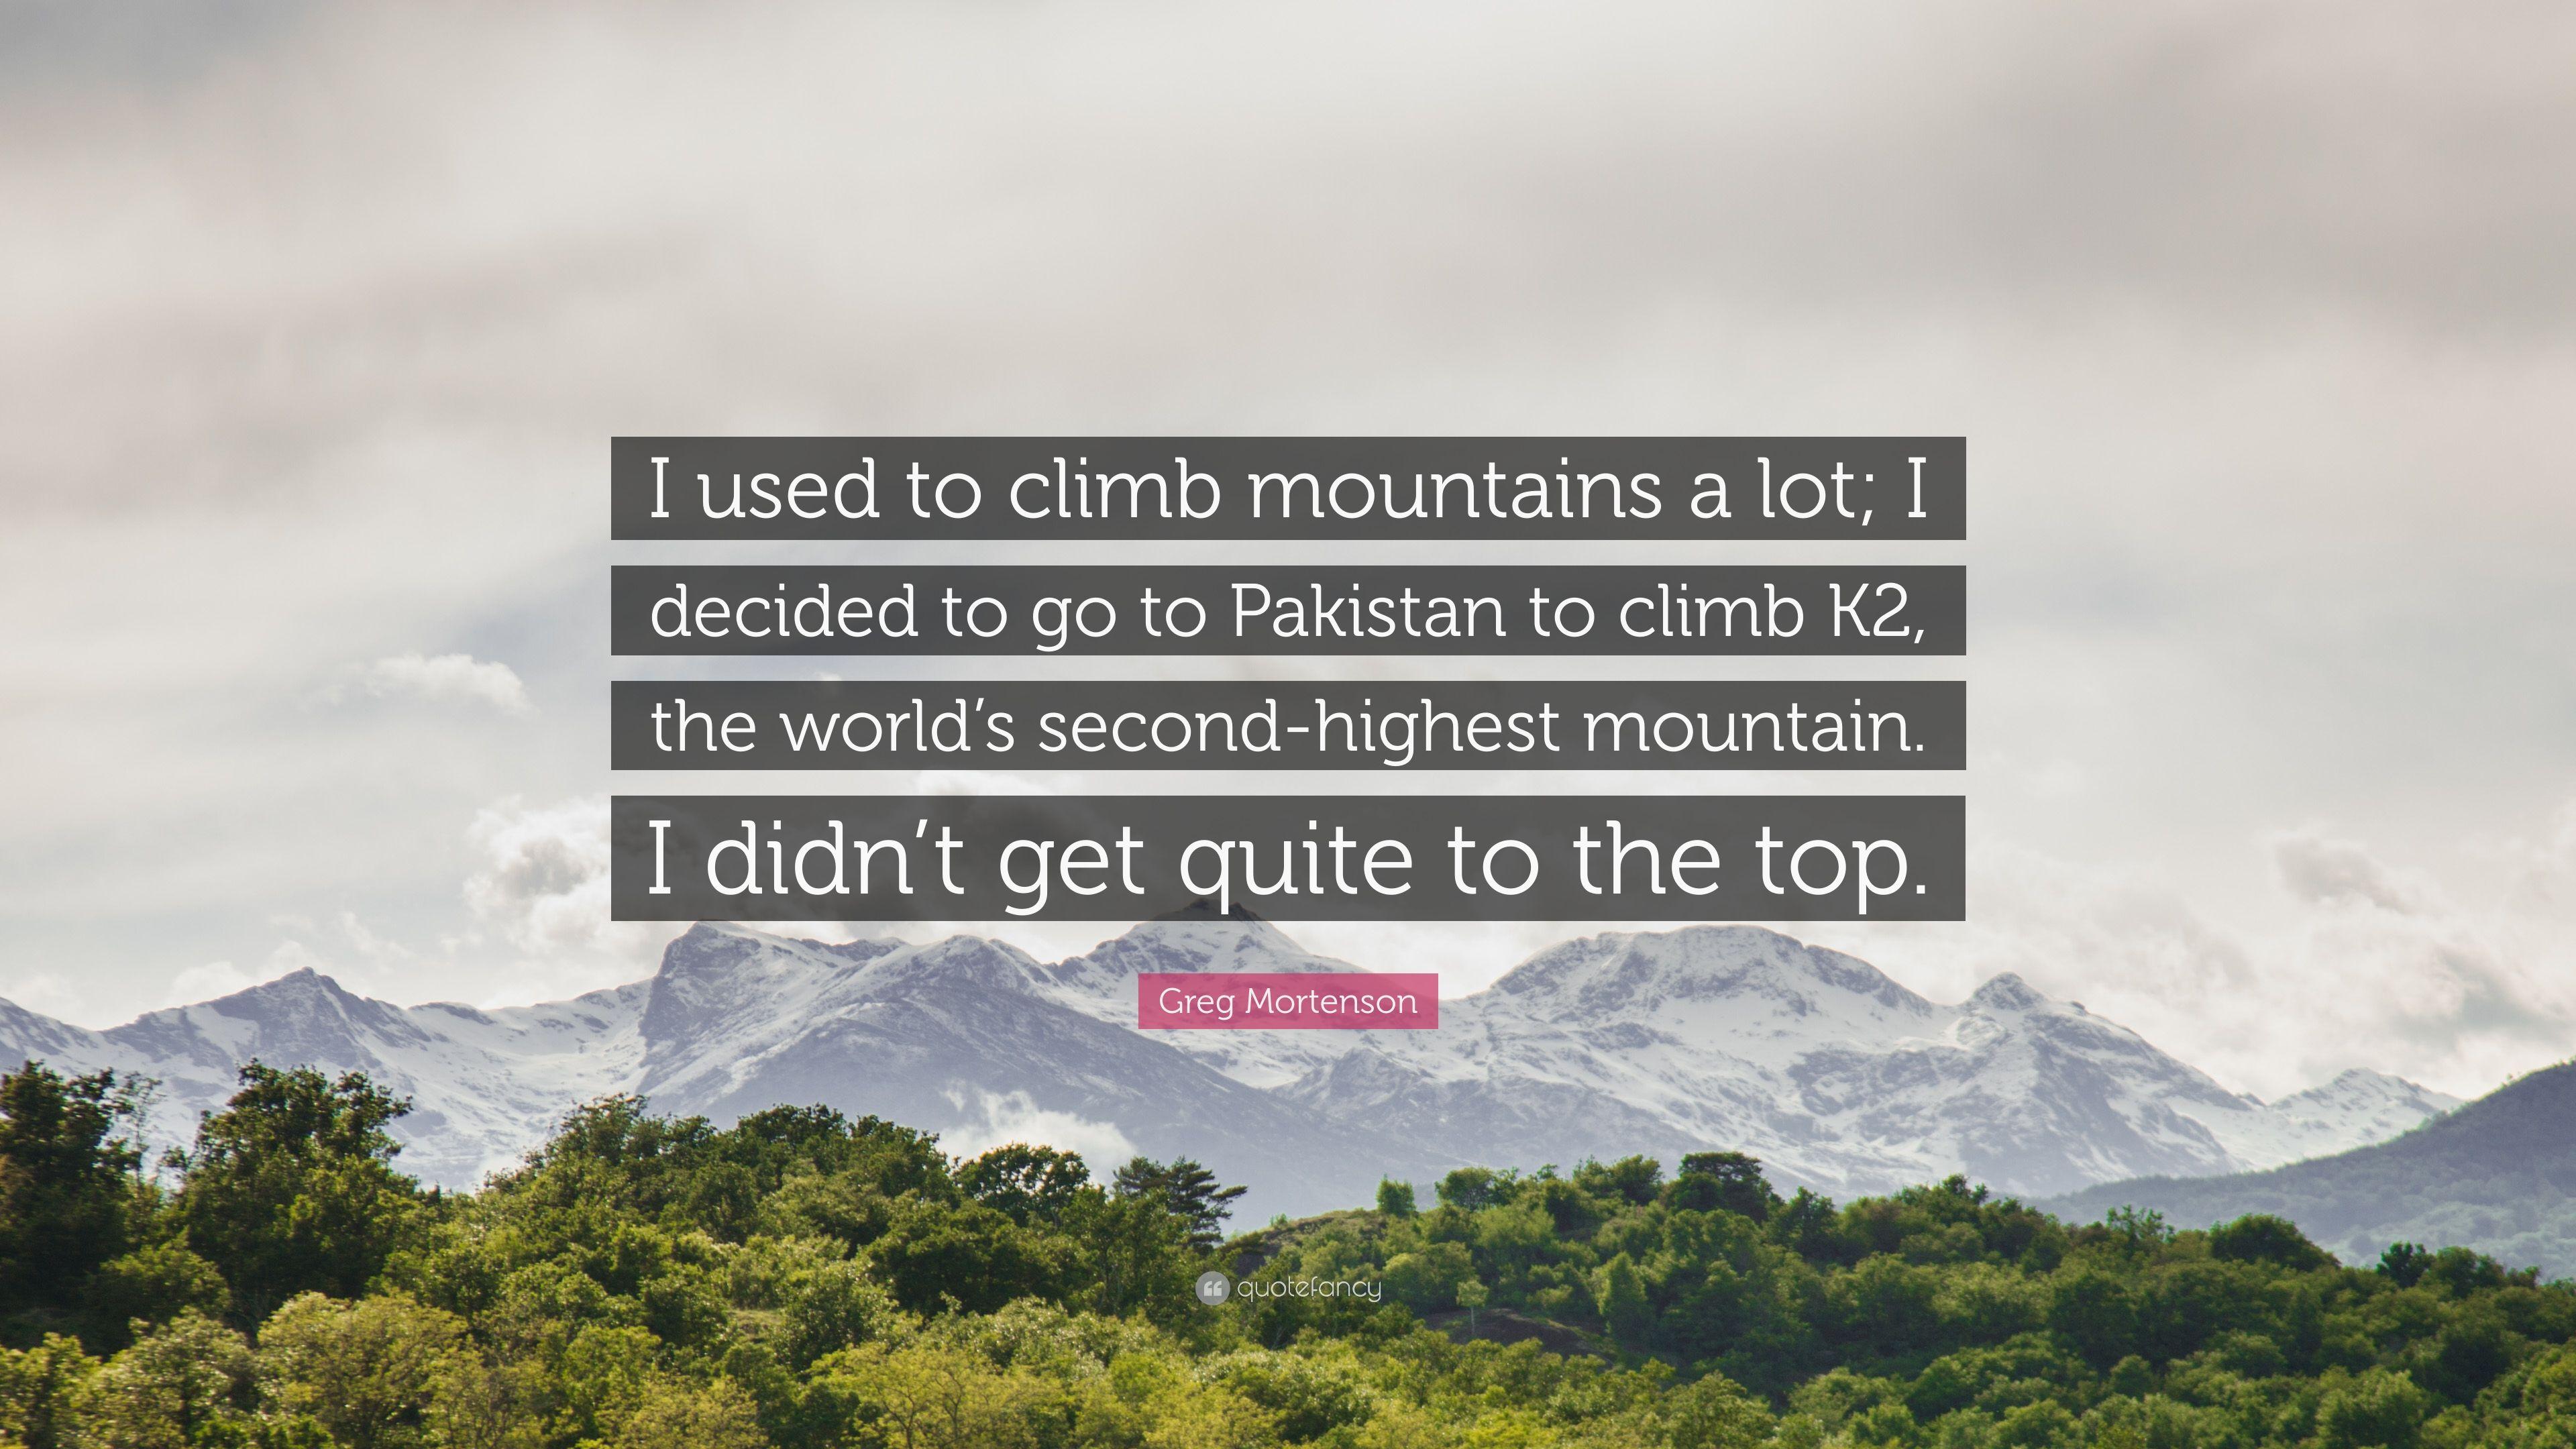 Greg Mortenson Quote: “I used to climb mountains a lot; I